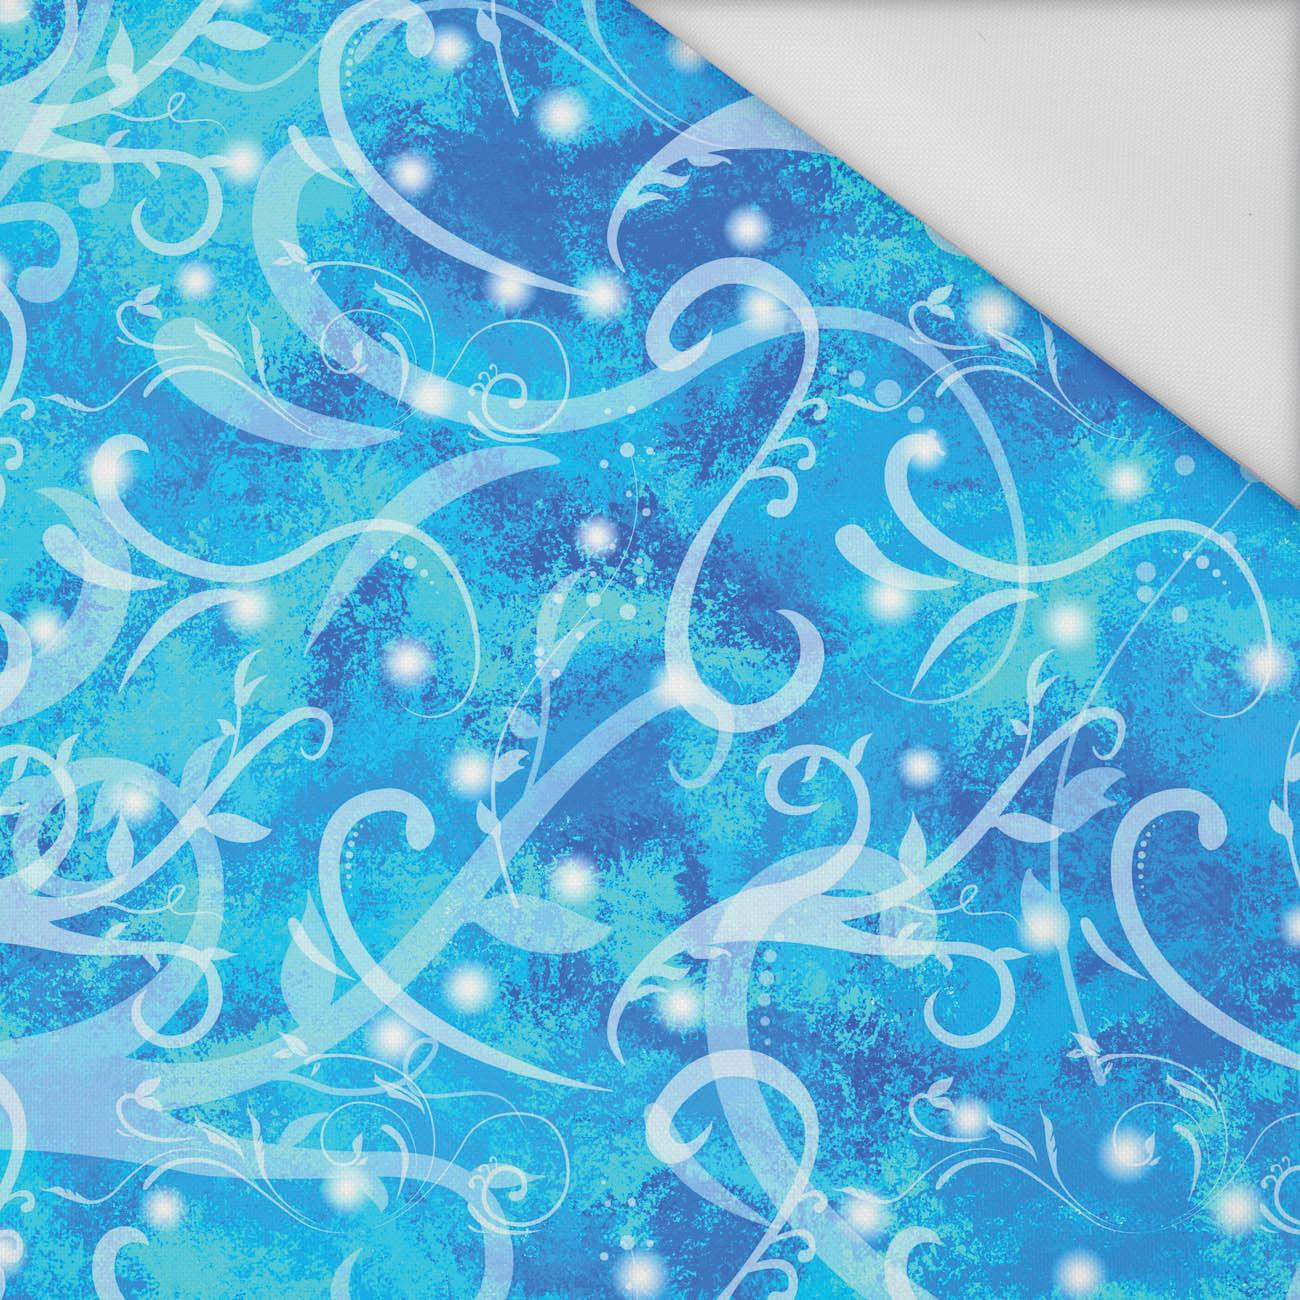 WINTER ETNO PAT. 1 (WINTER IS COMING) - Waterproof woven fabric